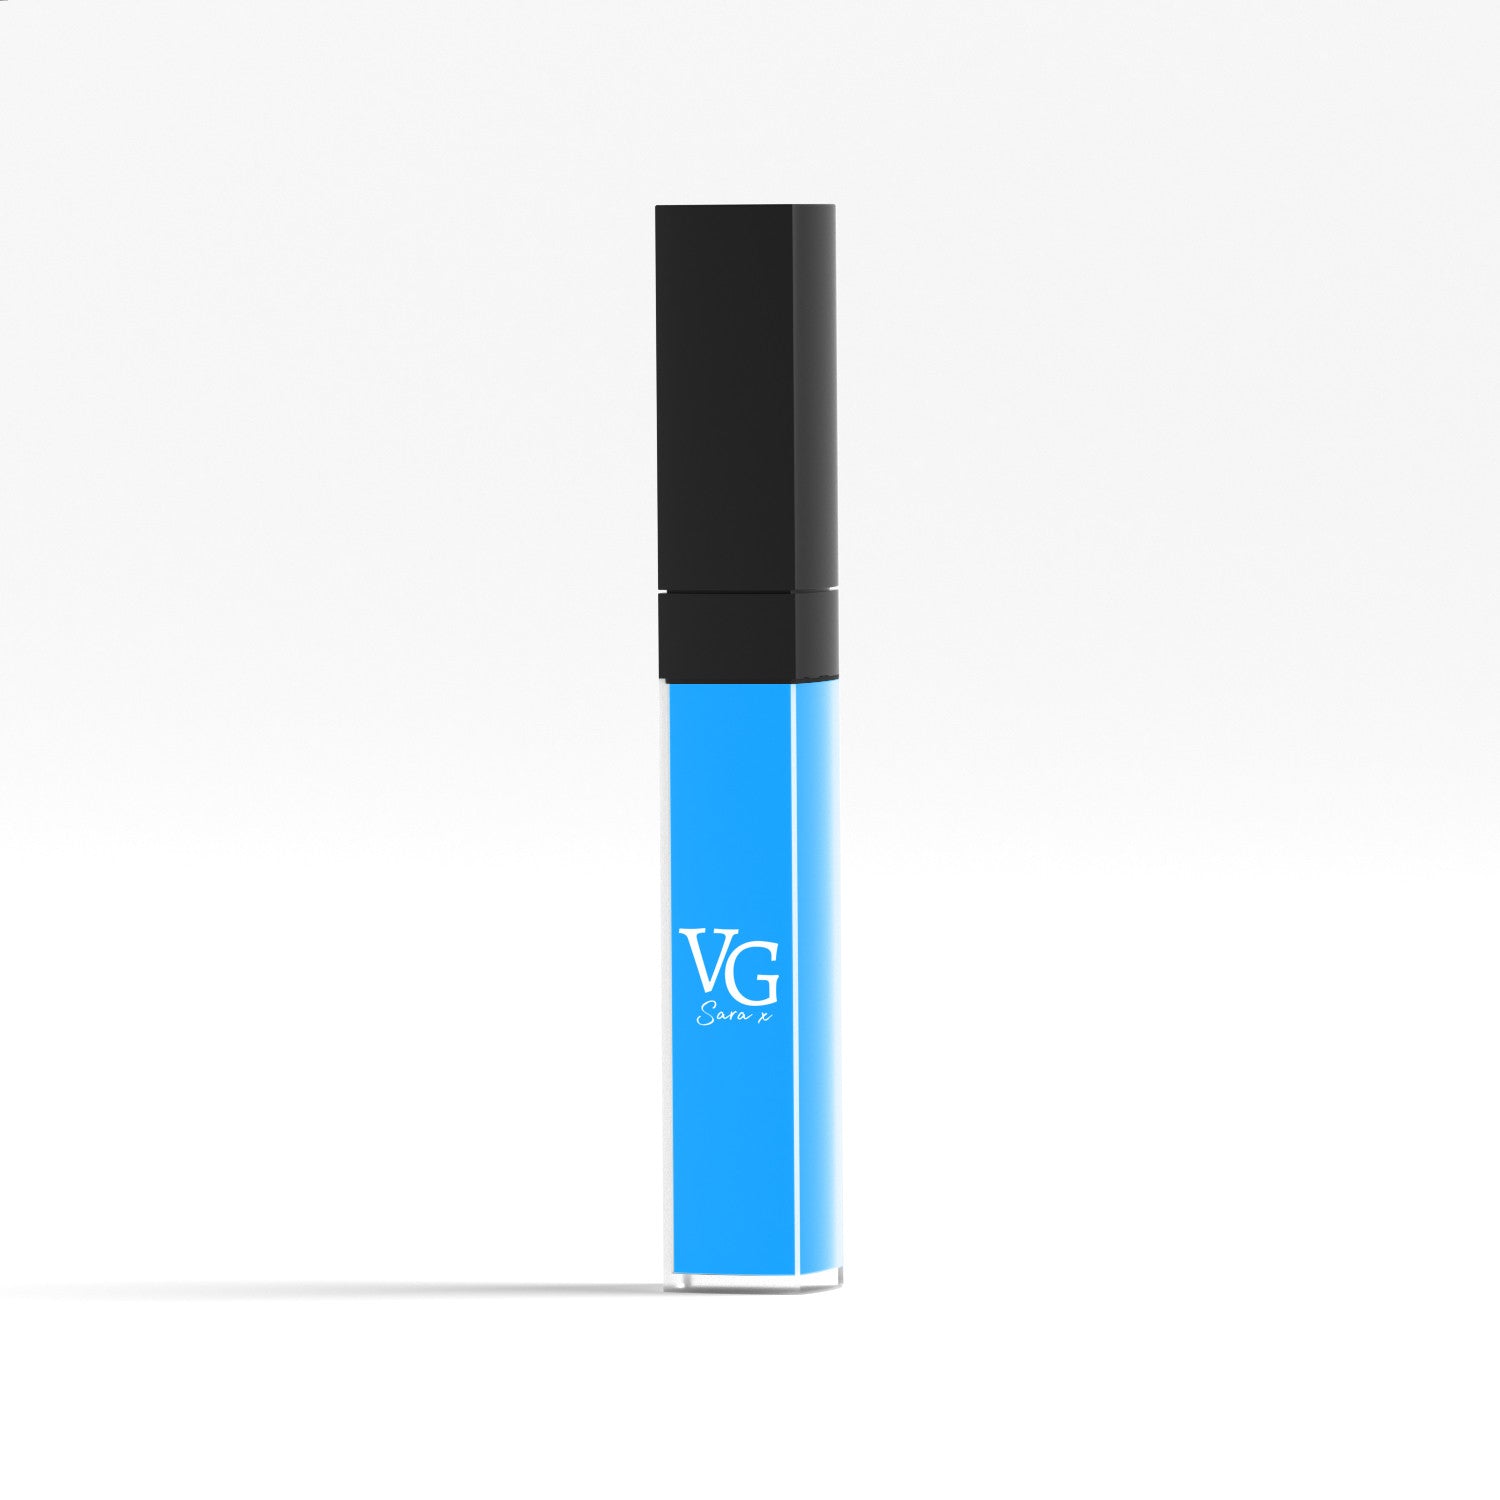 Sapphire blue vegan lip gloss from the VG cosmetics line